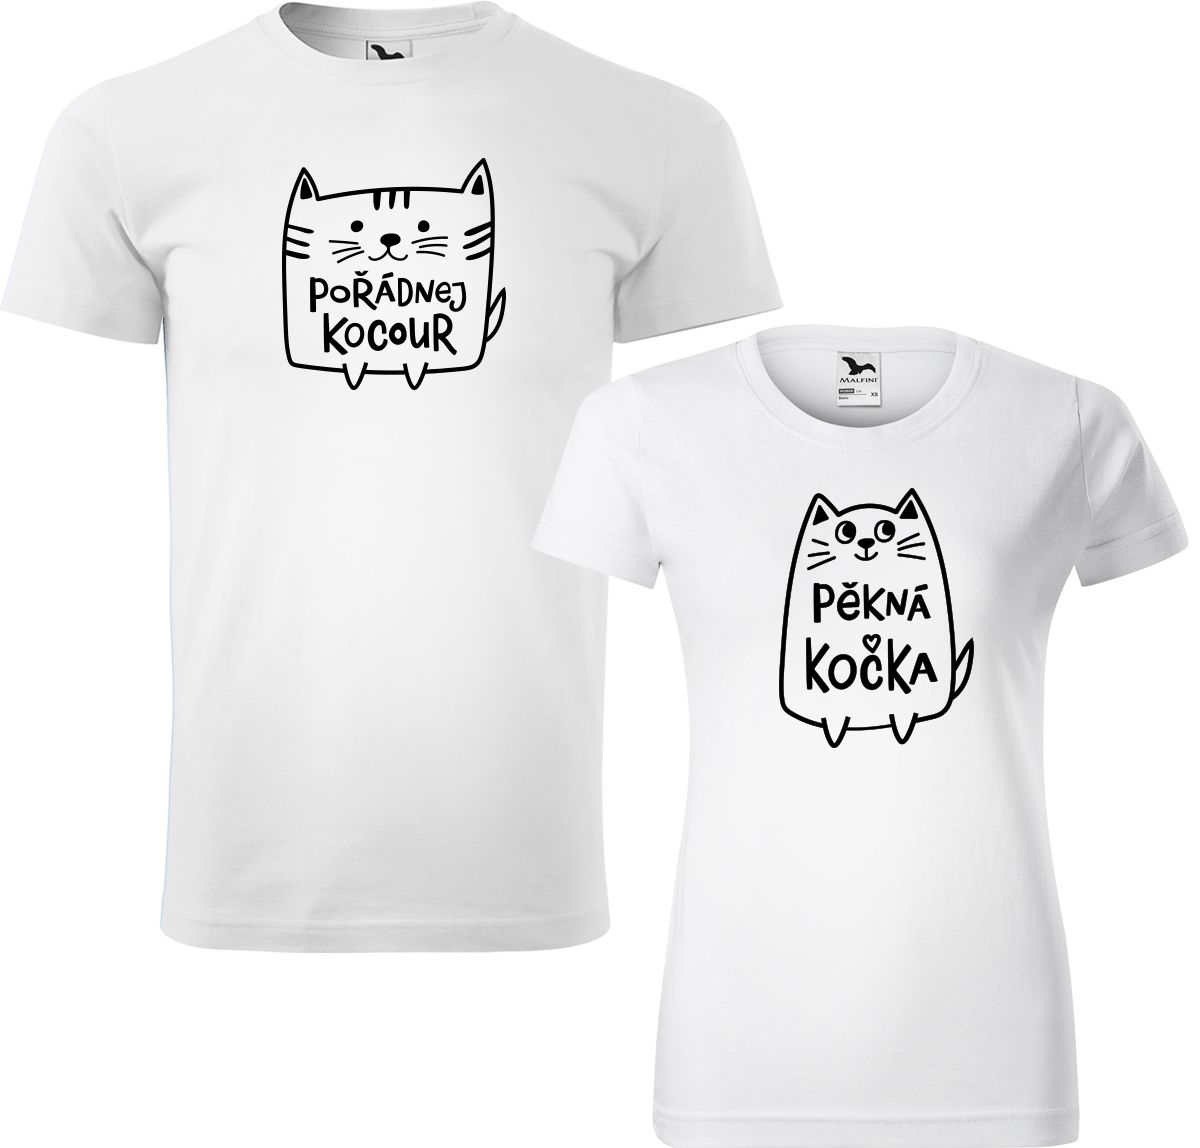 Trička pro páry - Pořádnej kocour a pěkná kočka Barva: Bílá (00), Velikost dámské tričko: 3XL, Velikost pánské tričko: XL